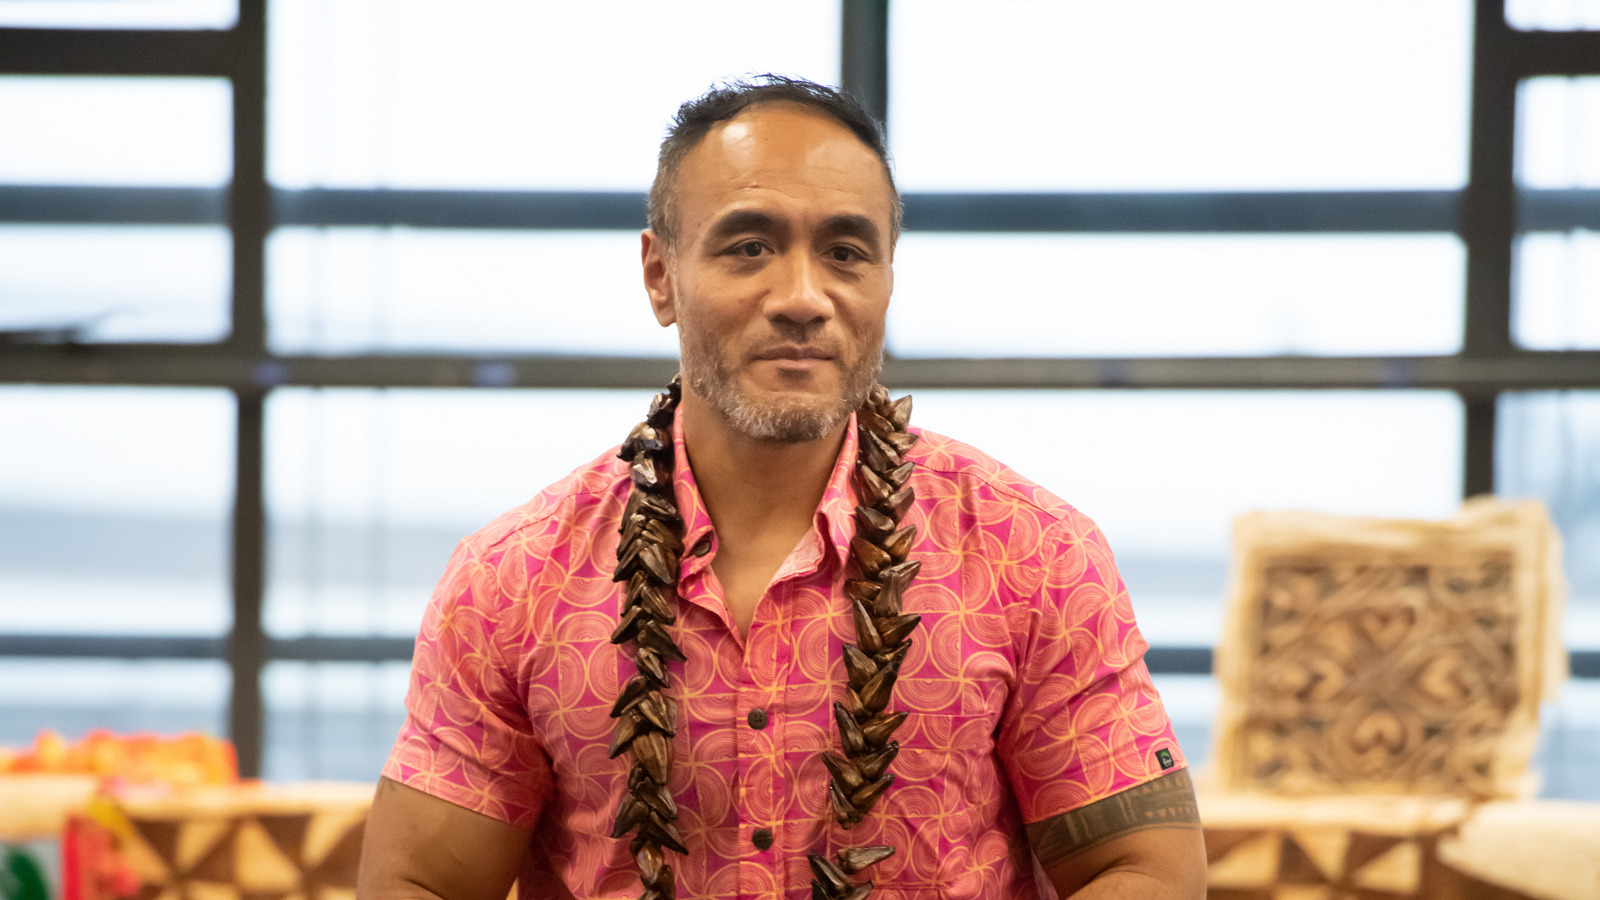 Samoan man wearing patterned pink samoan top looking past camera